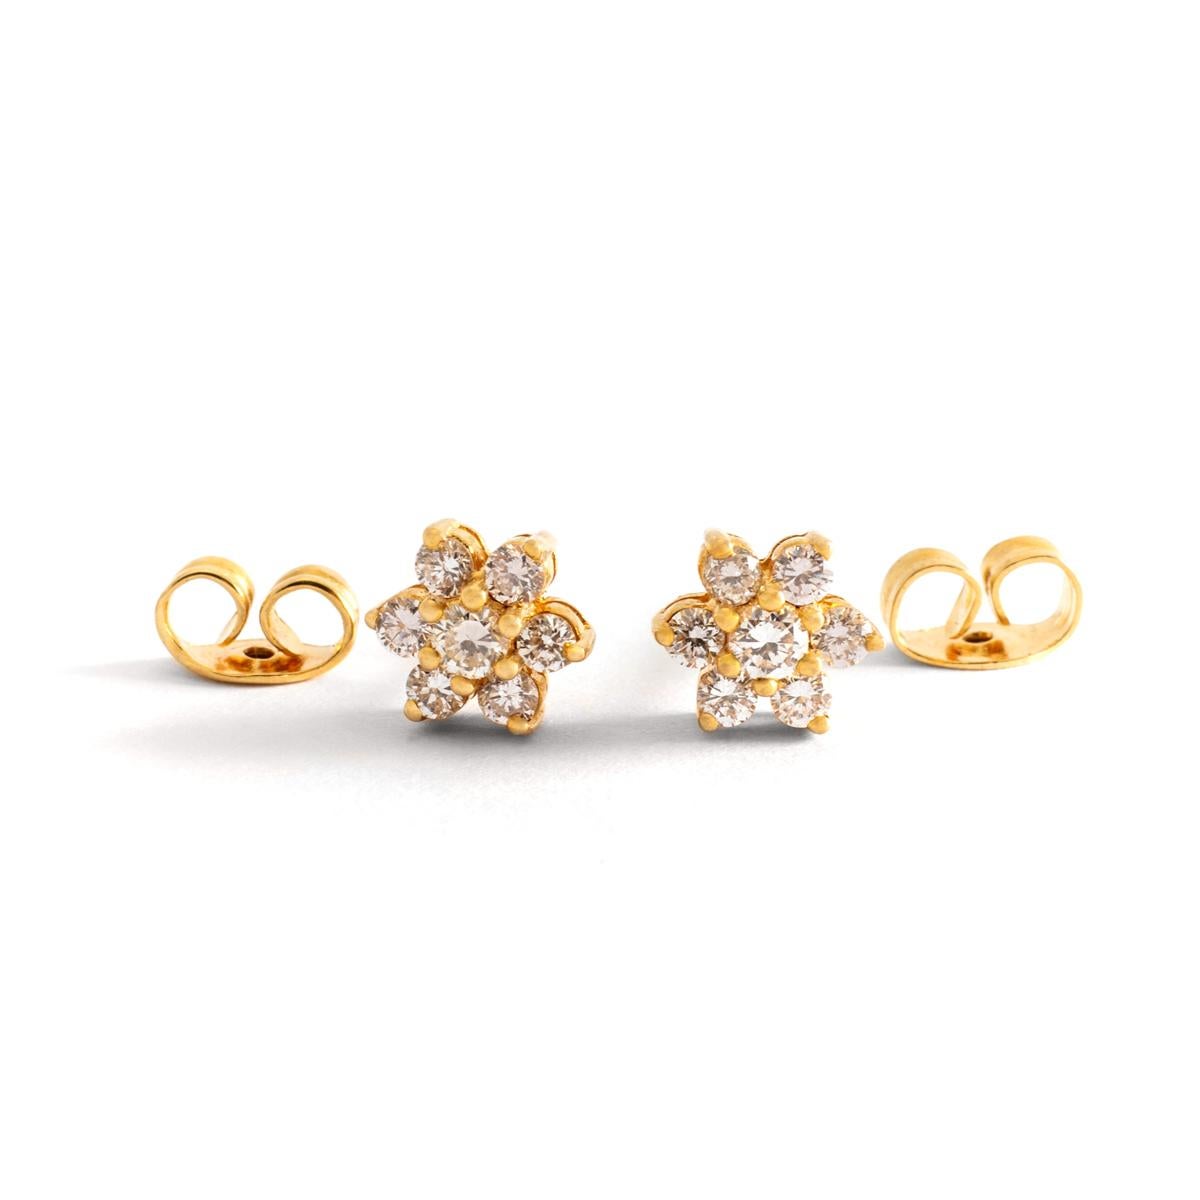 Diamond on yellow gold 18k Ear Studs.
14 round cut diamonds.
Diameter 0.70 centimeters.
Gross weight: 1.57 grams.